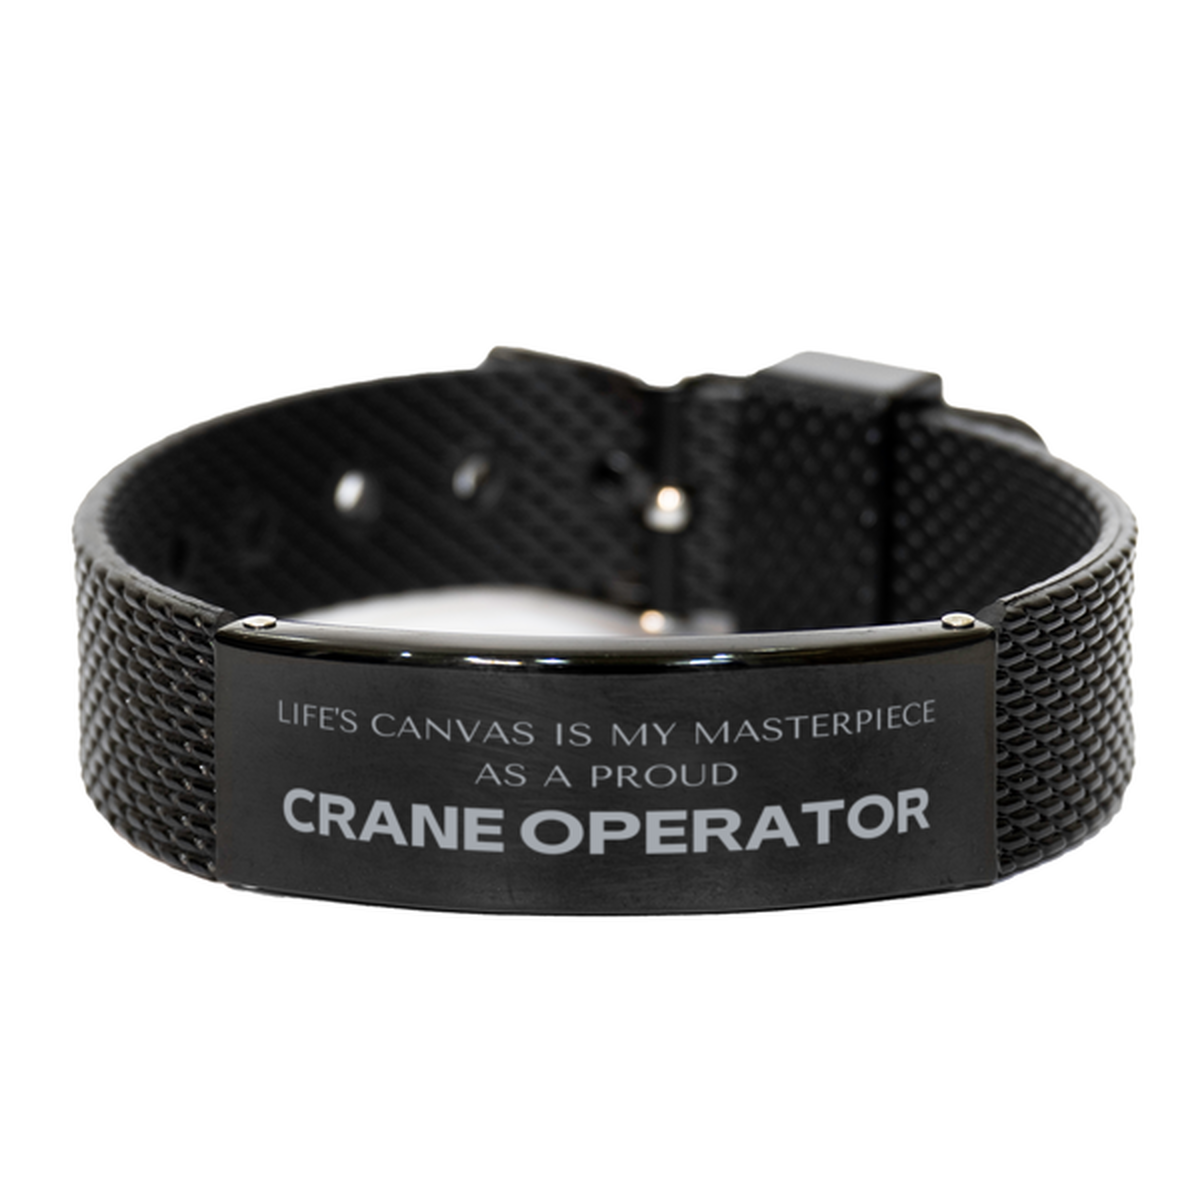 Proud Crane Operator Gifts, Life's canvas is my masterpiece, Epic Birthday Christmas Unique Black Shark Mesh Bracelet For Crane Operator, Coworkers, Men, Women, Friends